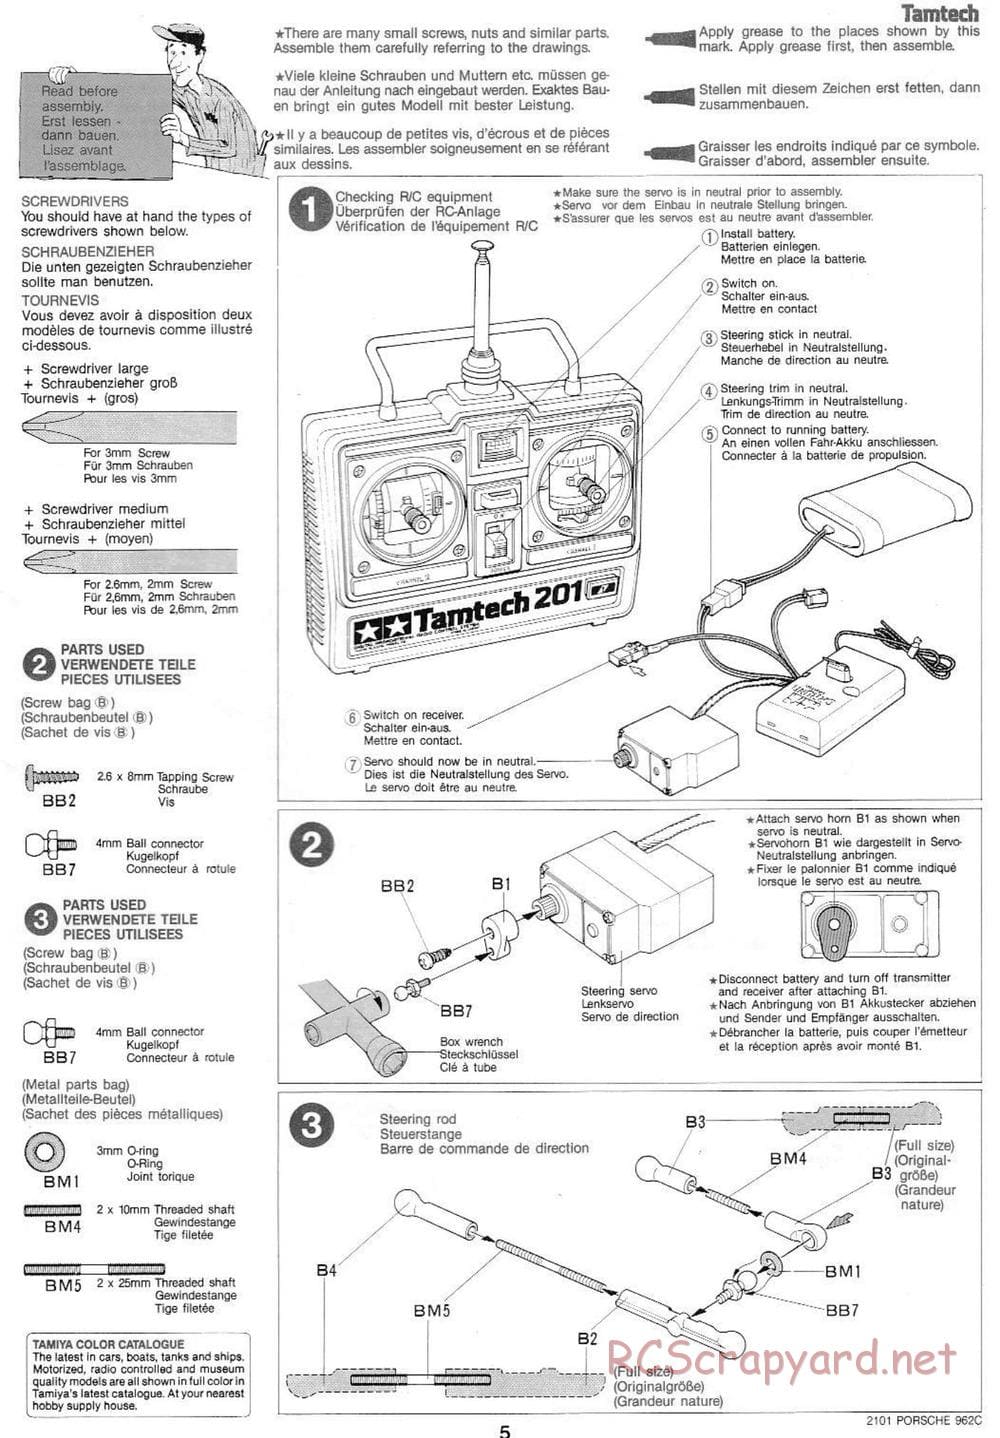 Tamiya - Tamtech - Porsche 962C Chassis - Manual - Page 5